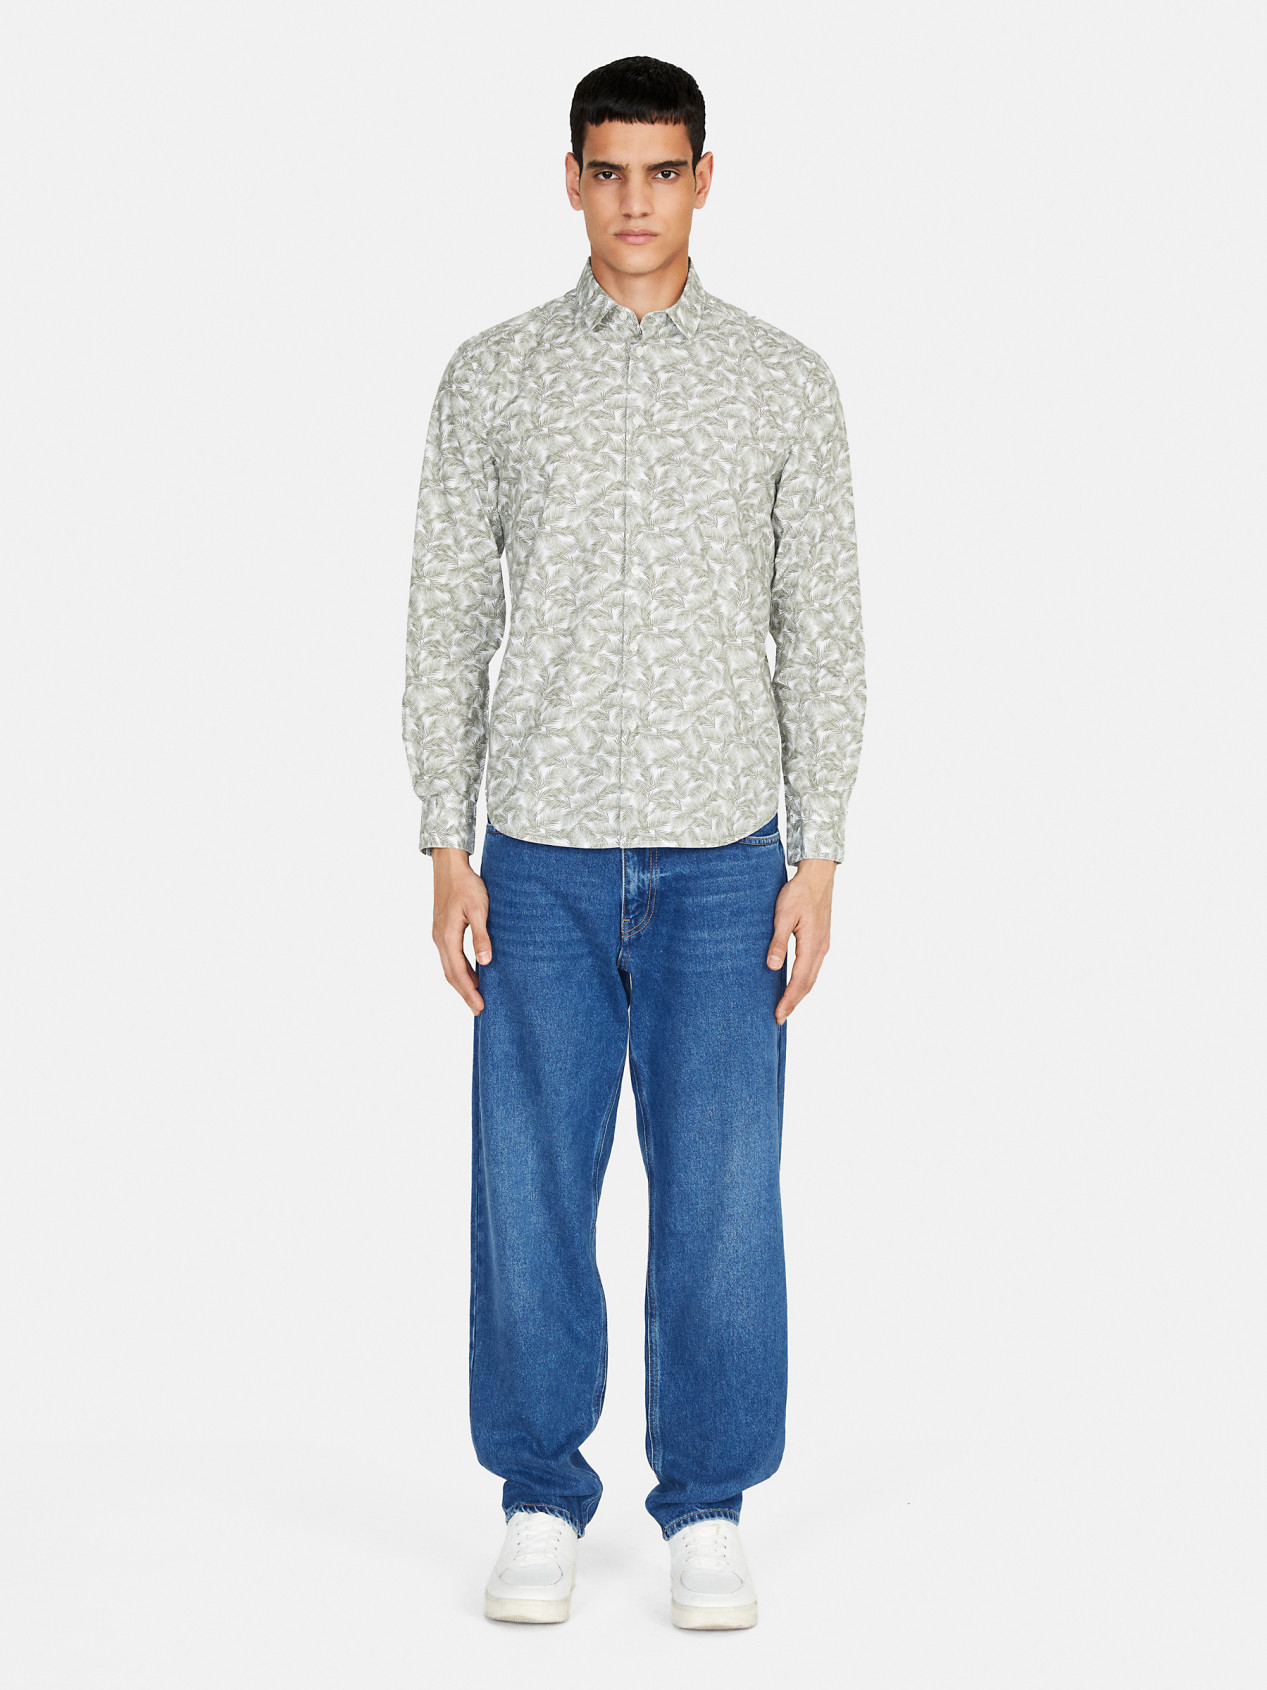 Sisley - Printed Shirt, Man, Multi-color, Size: S